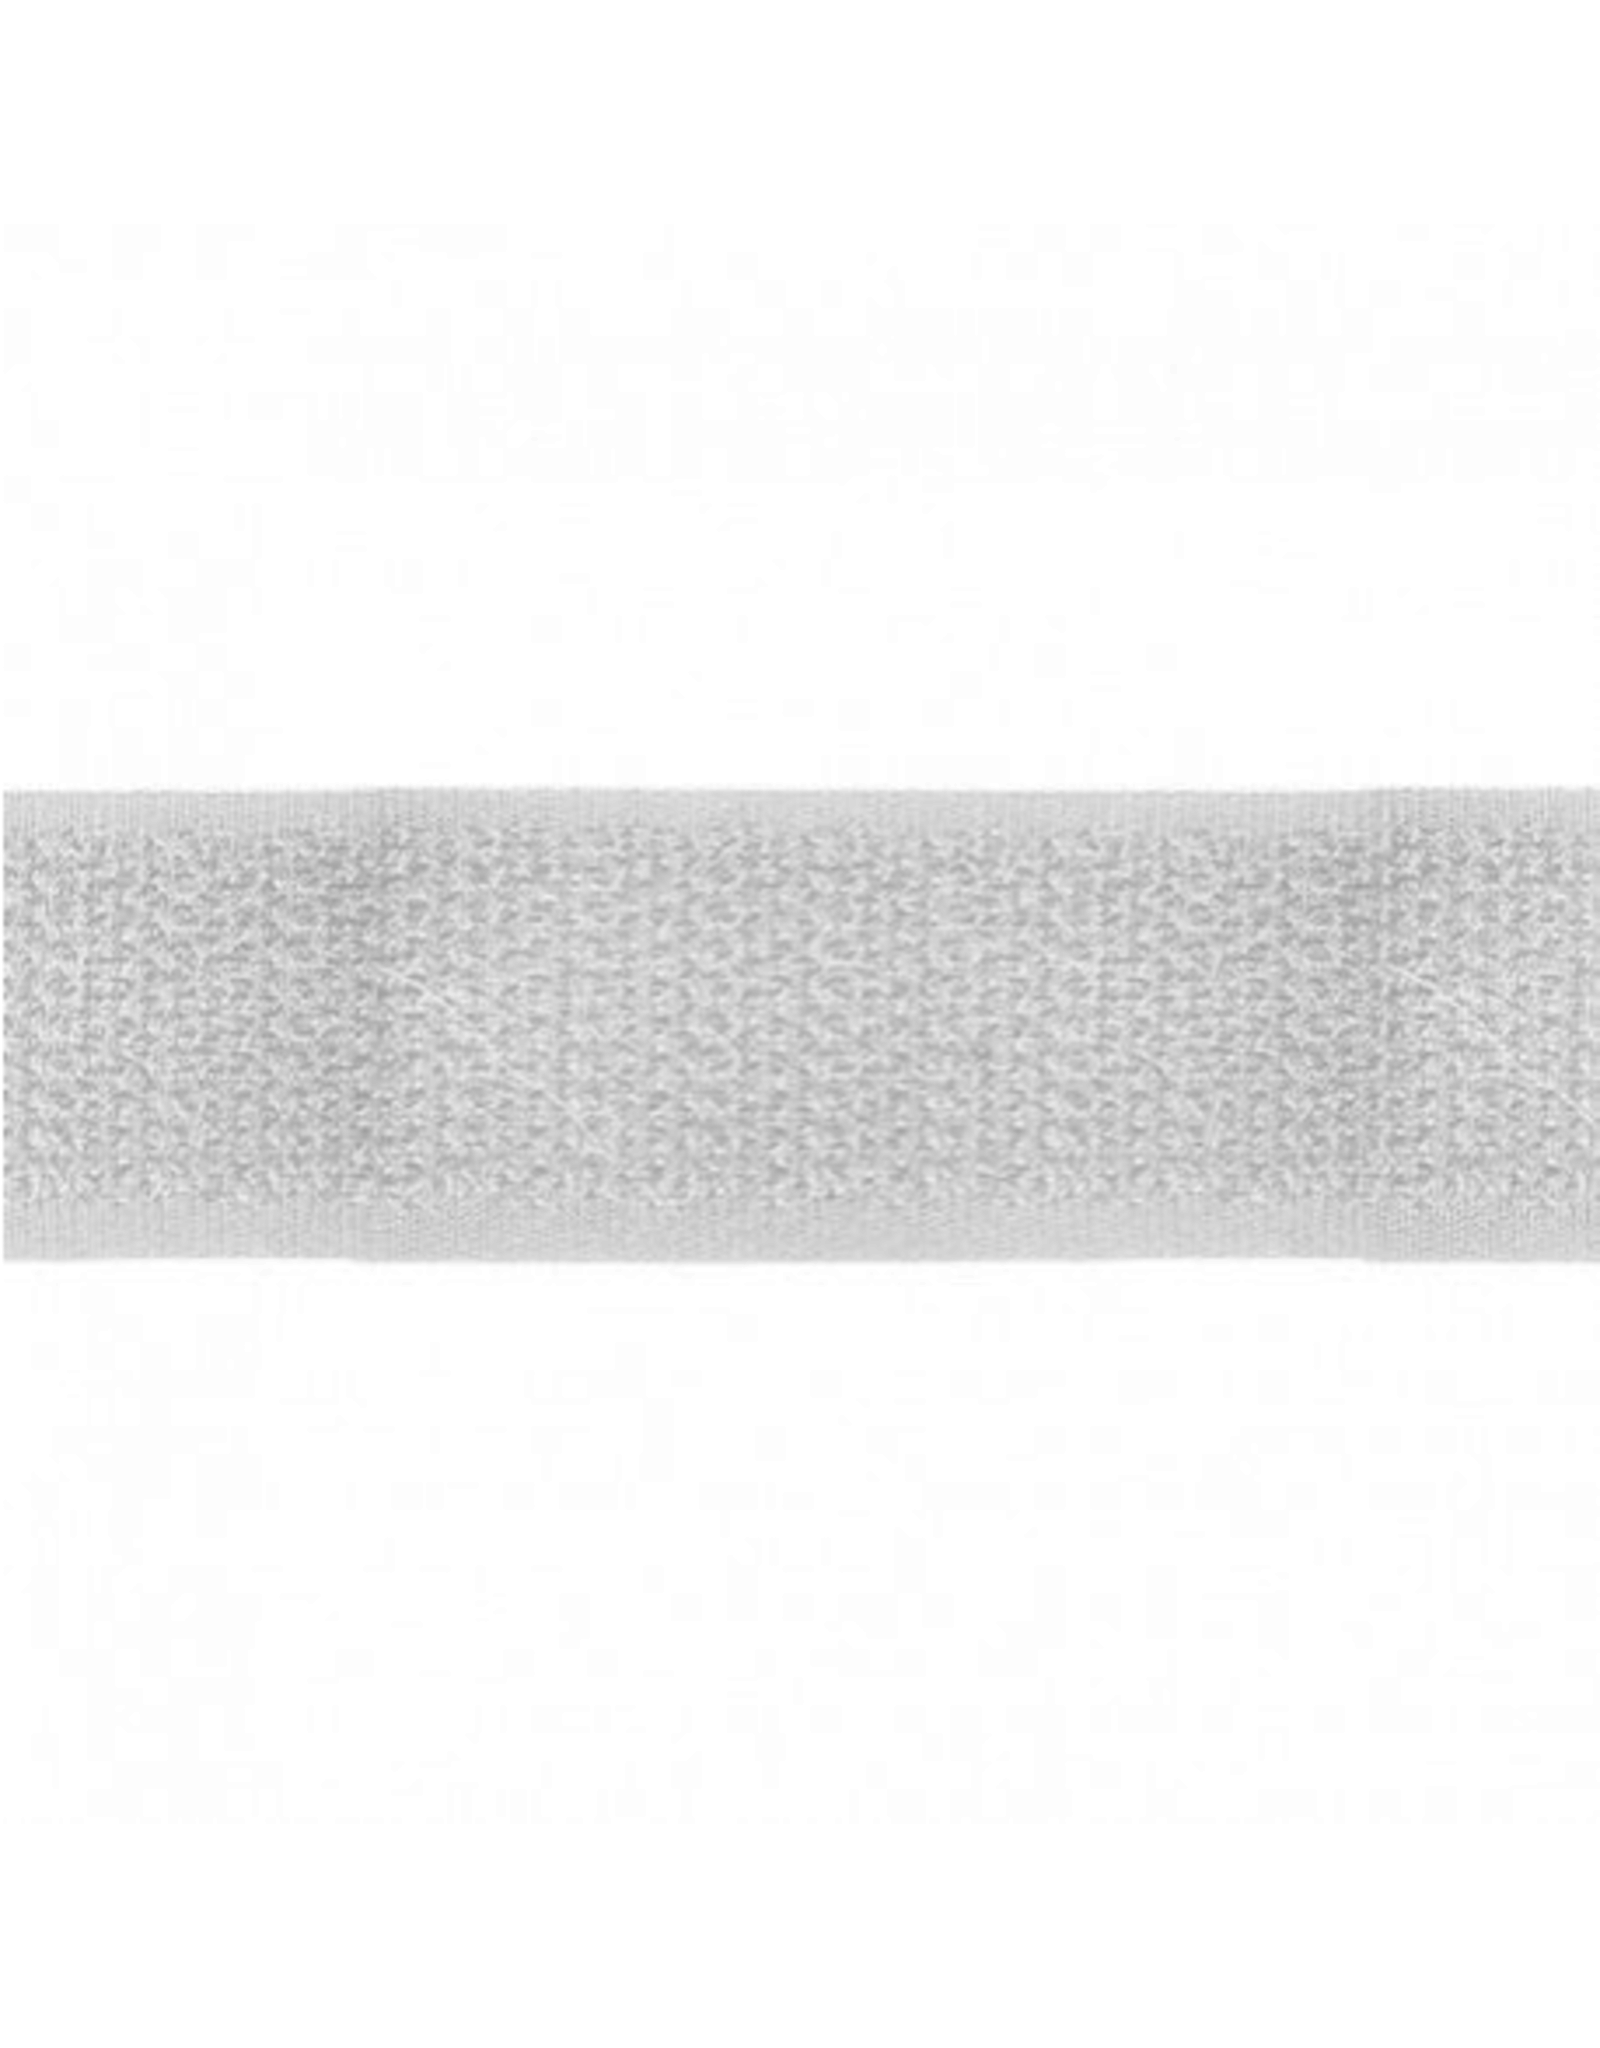 Stéphanoise Velcro niet-zelfklevend haak 2.5cm wit